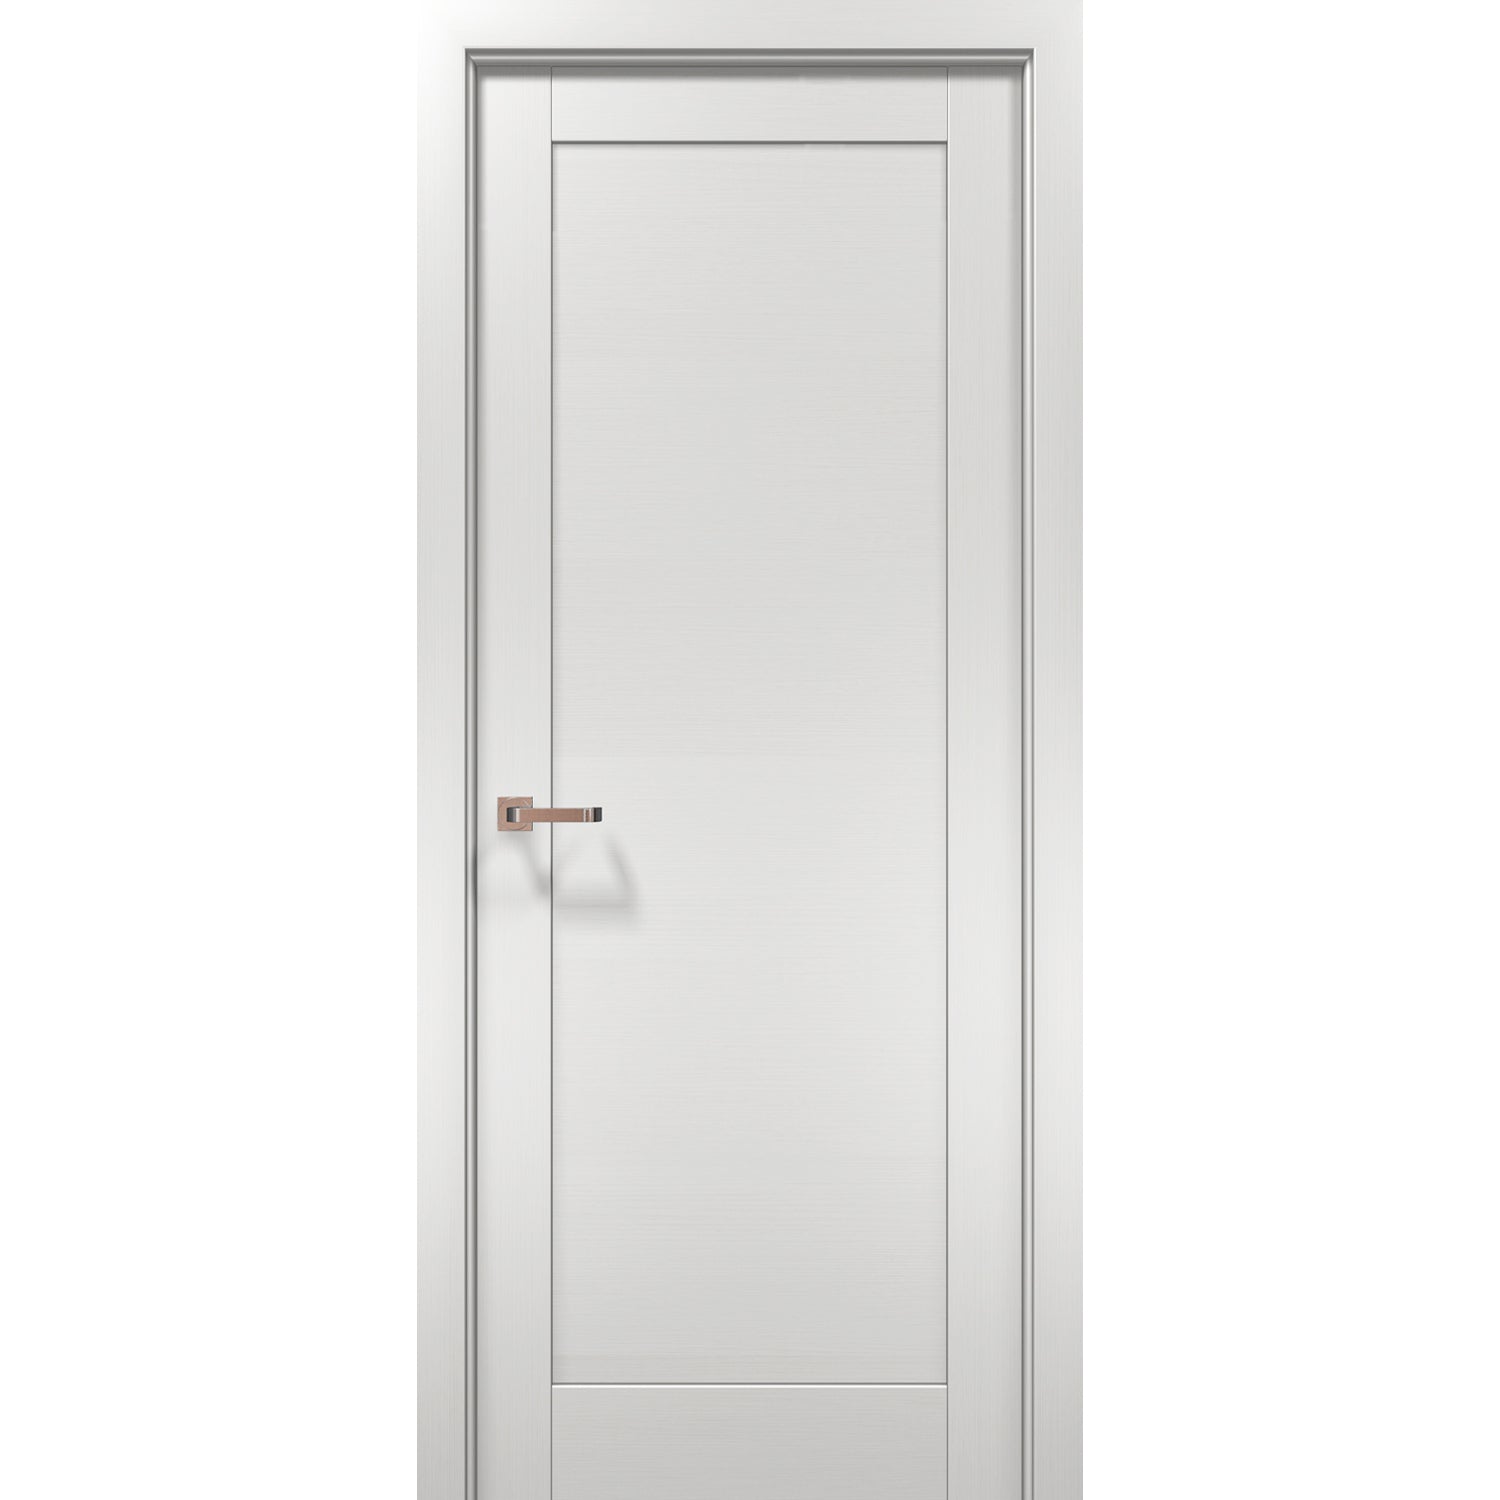 SARTODOORS MDF Door 42 x 84 with Hardware | Quadro 4111 White Ash | Single Pre-hung Panel Frame | Doors 